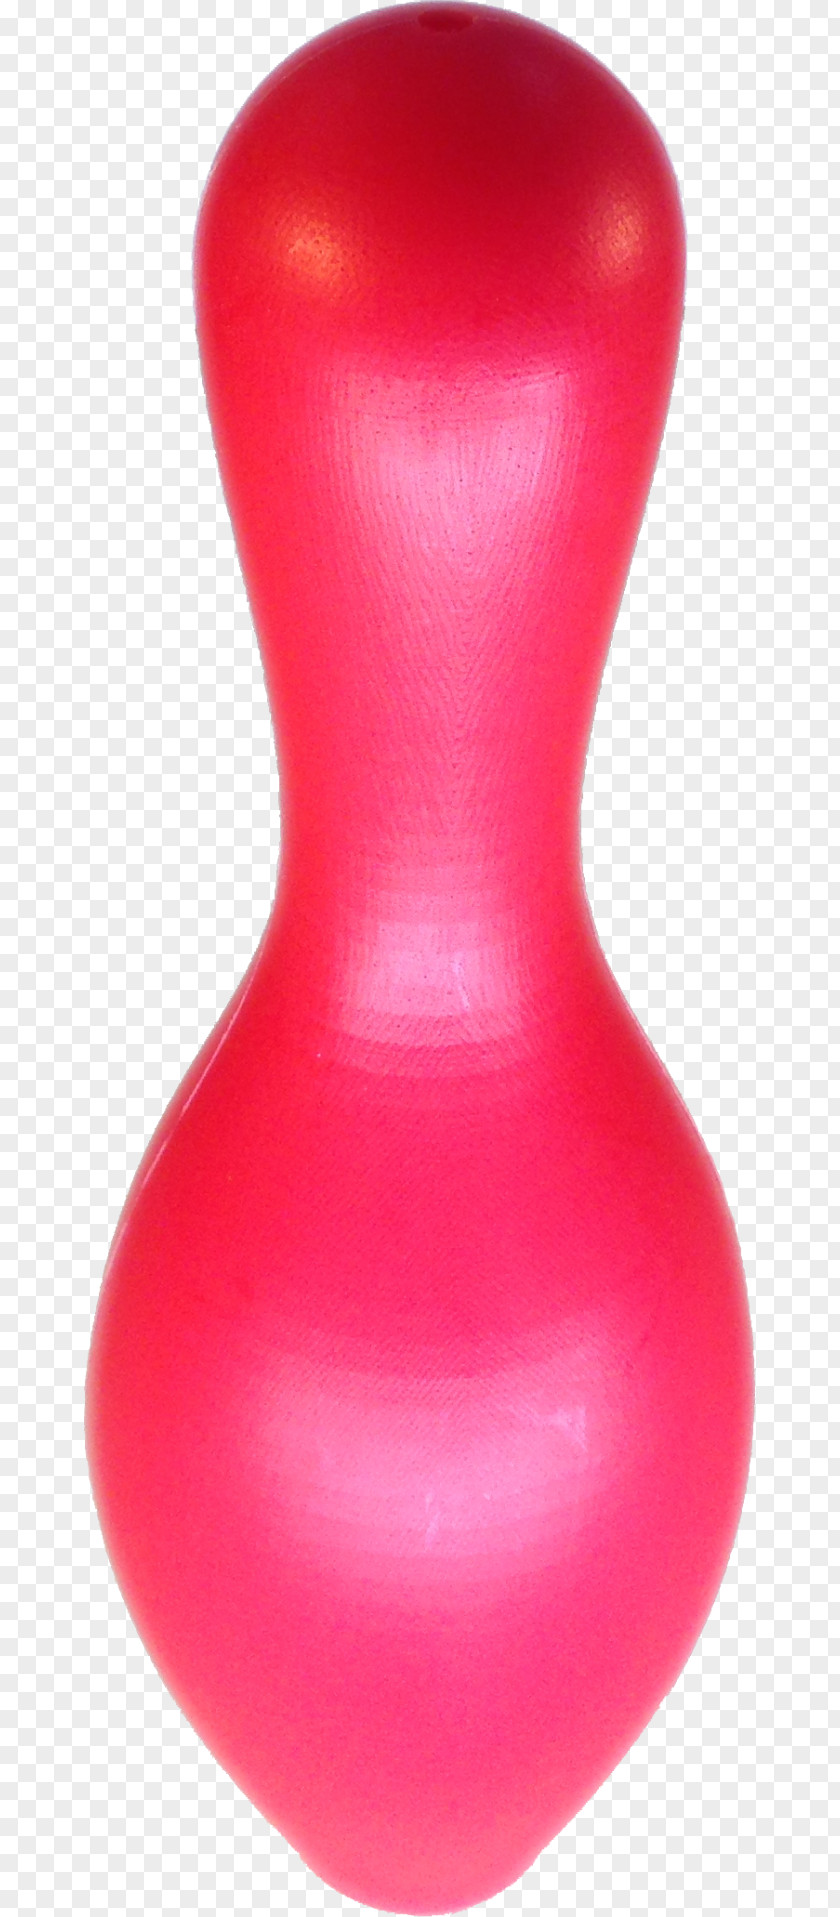 Pink Bowling Pin Water Bottle Pins Clip Art Image Description PNG